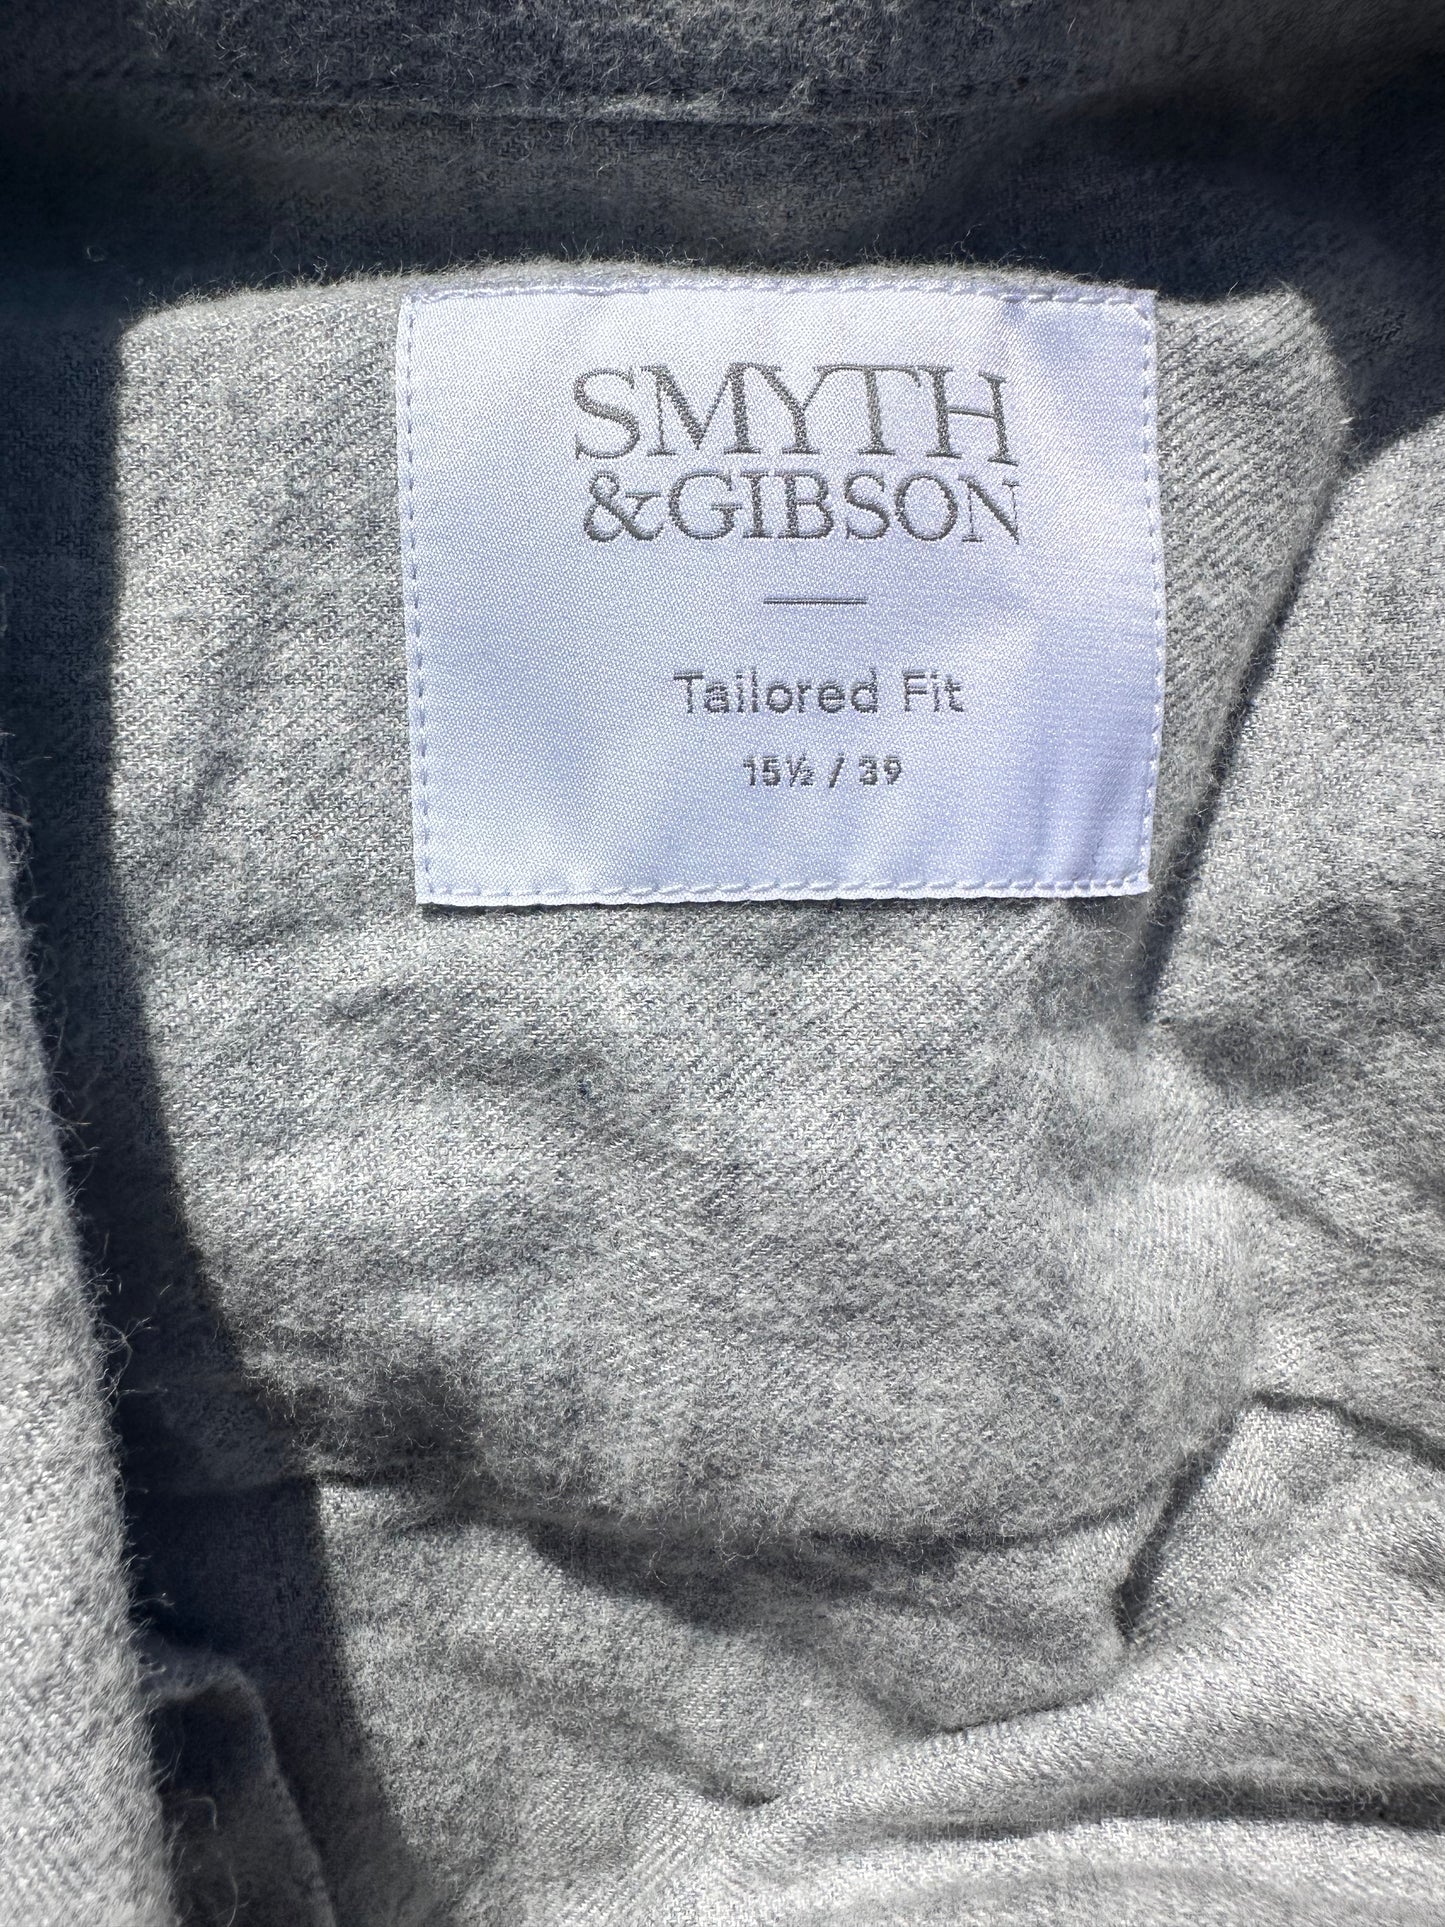 THE GENTLEMEN: Dry Eyes' Grey SMYTH & GIBSON Long sleeve Taylor fit Shirt (16.5)